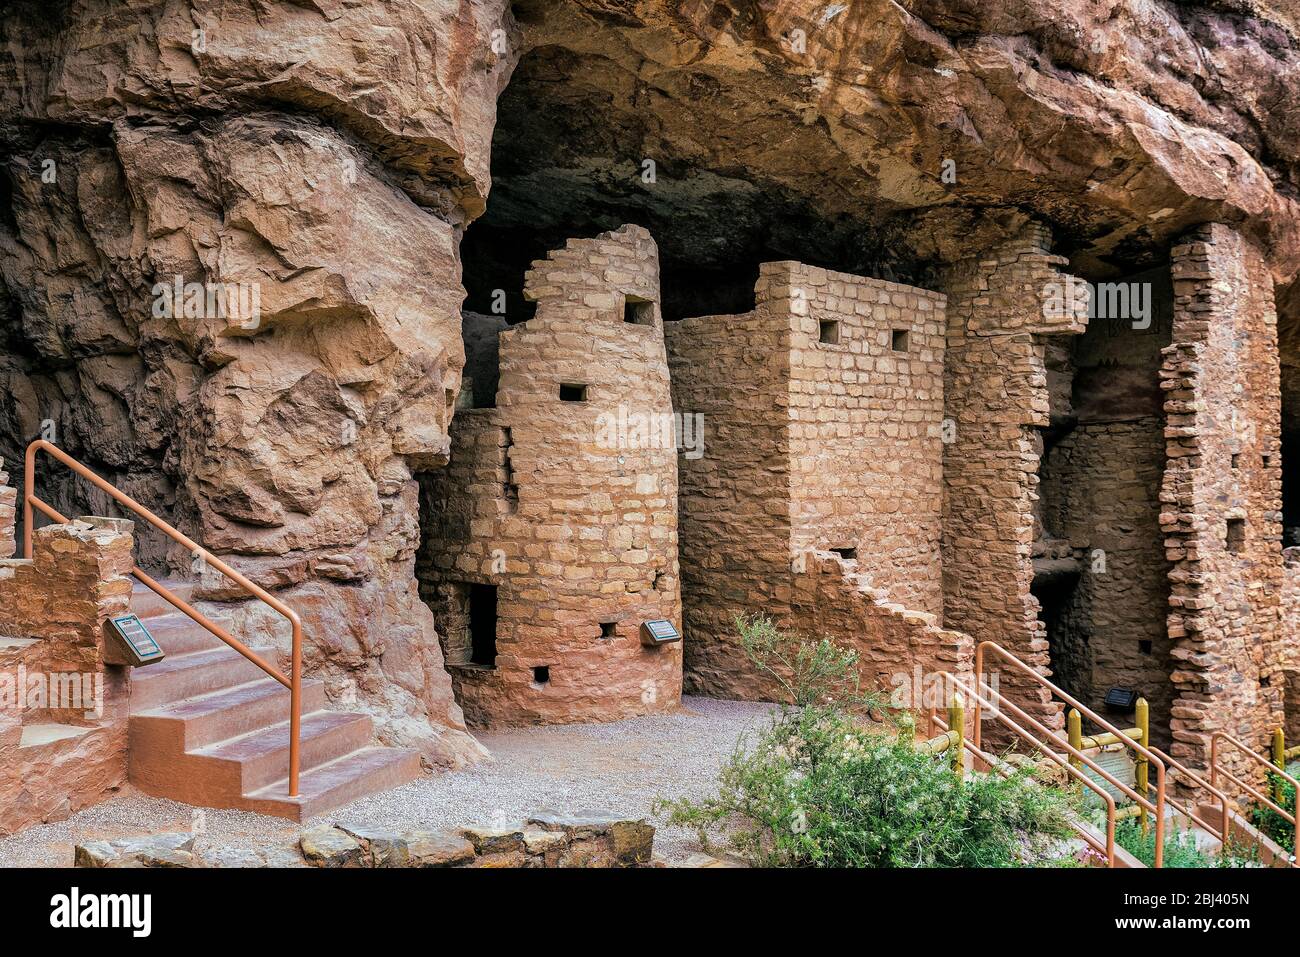 Manitou Cliff Dwellings of the Anasazi in Colorado. Stock Photo